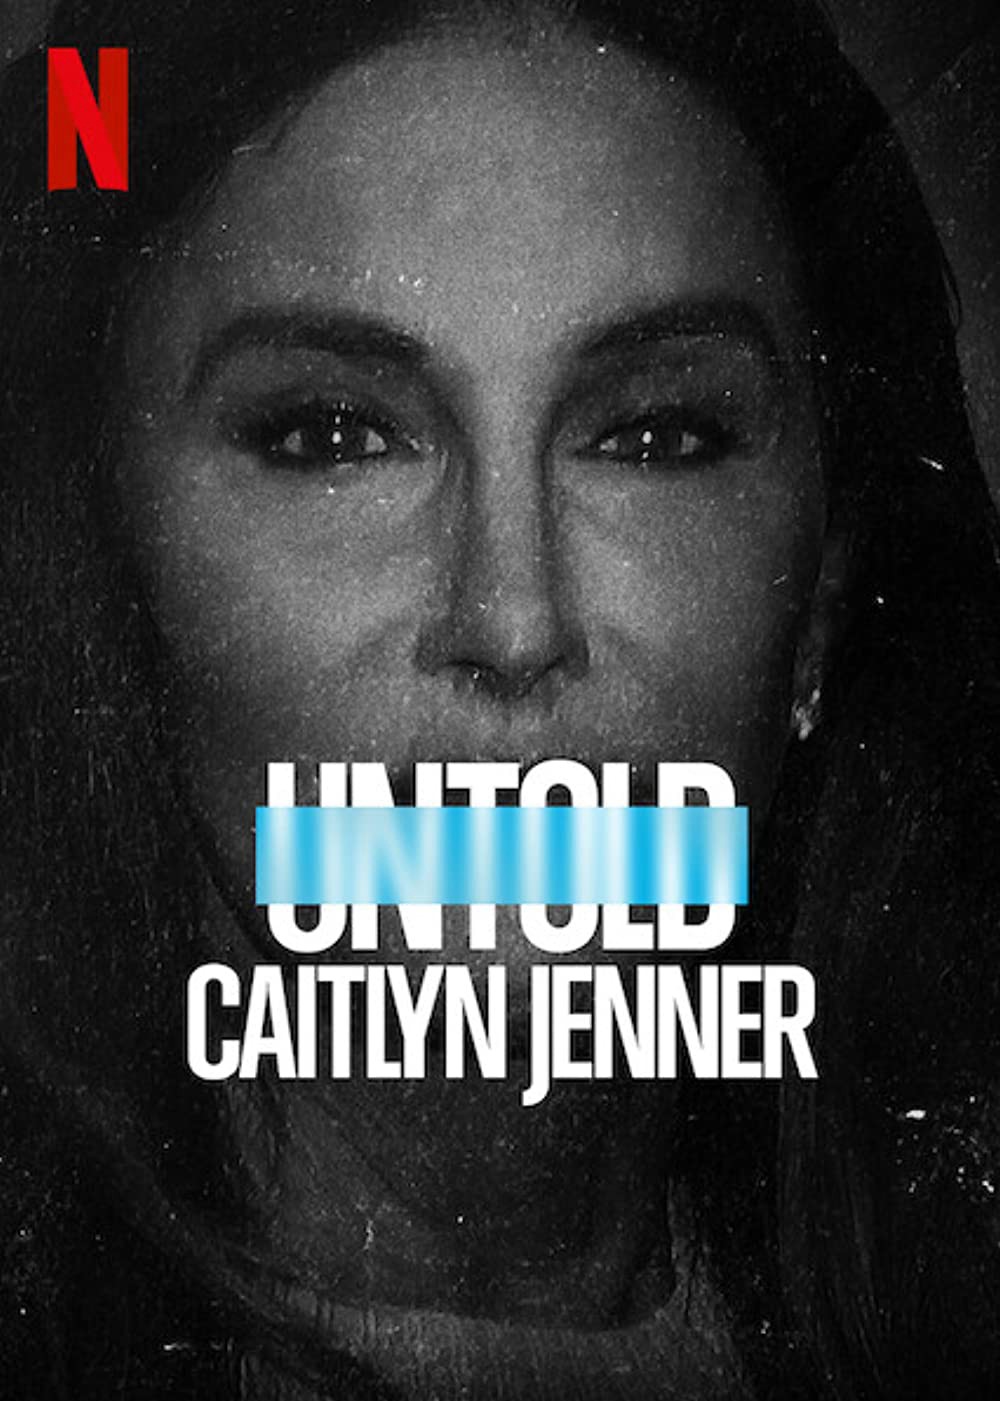 Bí mật giới thể thao: Caitlyn Jenner - Bí mật giới thể thao: Caitlyn Jenner (2021)